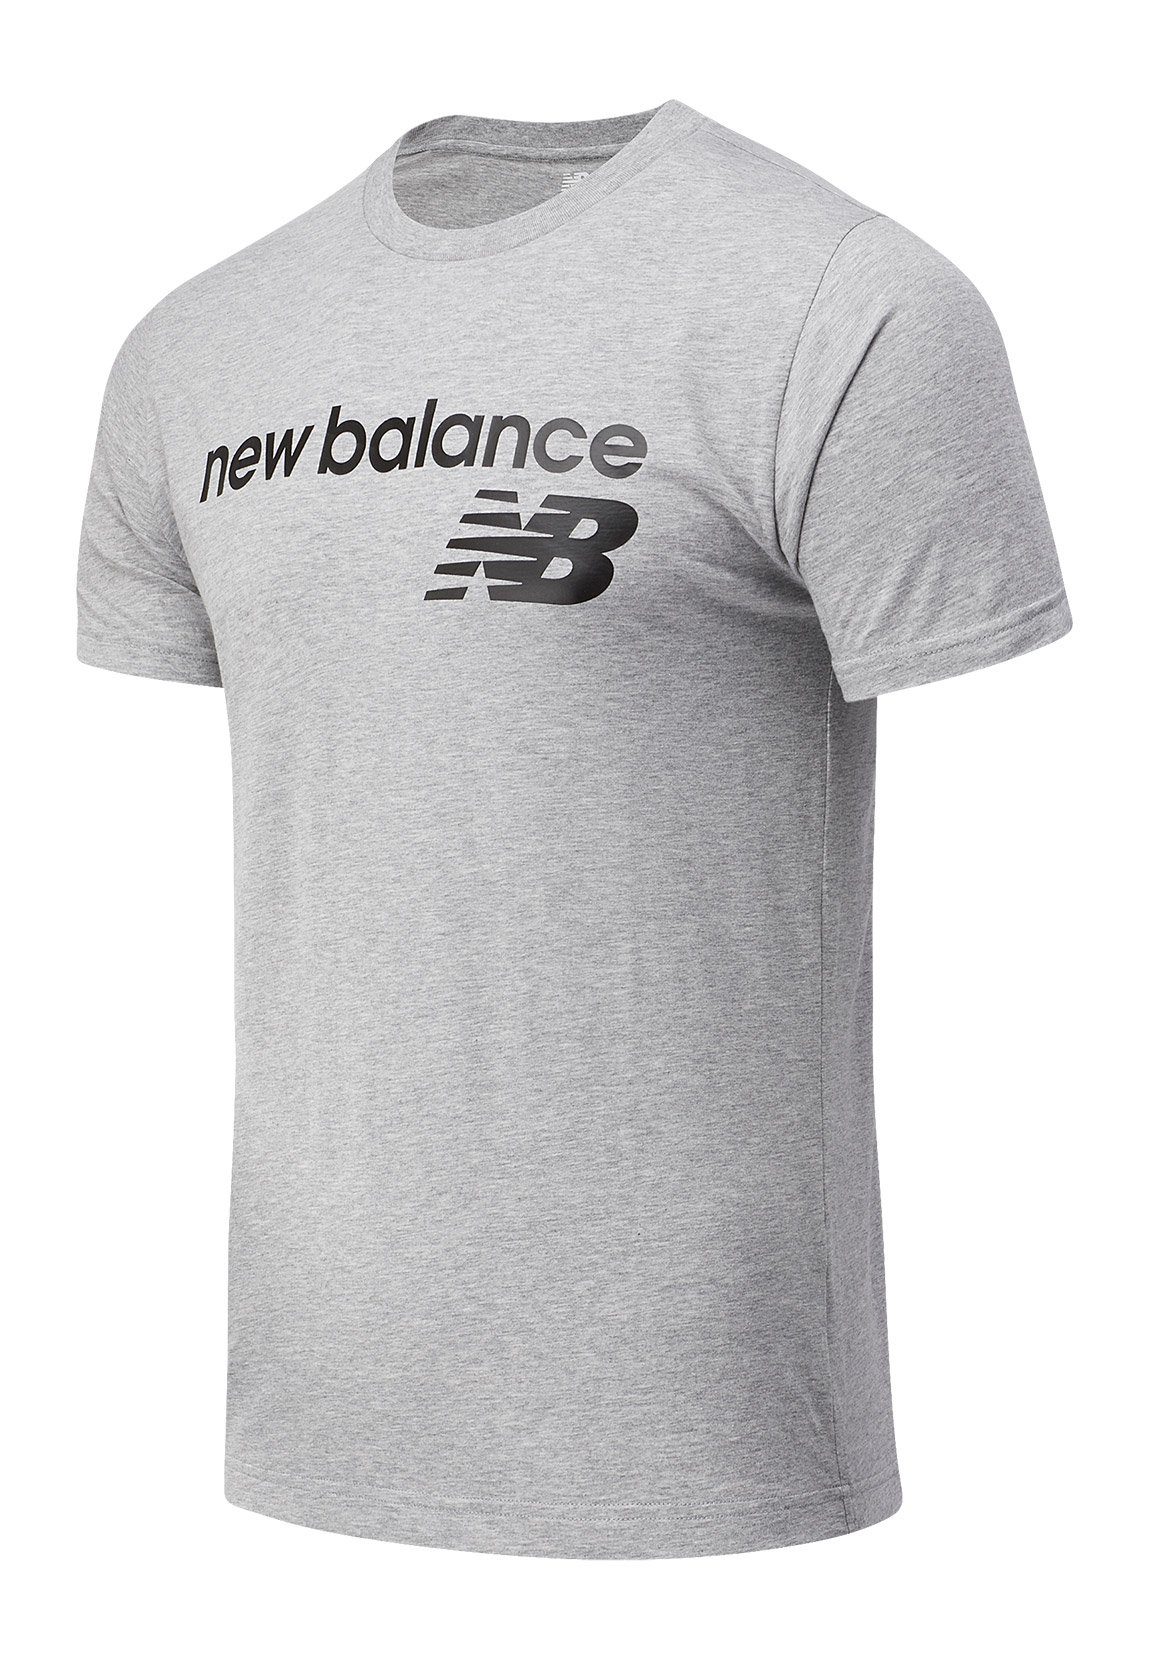 T-Shirt ATHLGREY Balance CORE CLASSIC AG MT03905 New LOGO TEE Athletic Balance Grey T-Shirt New Gau